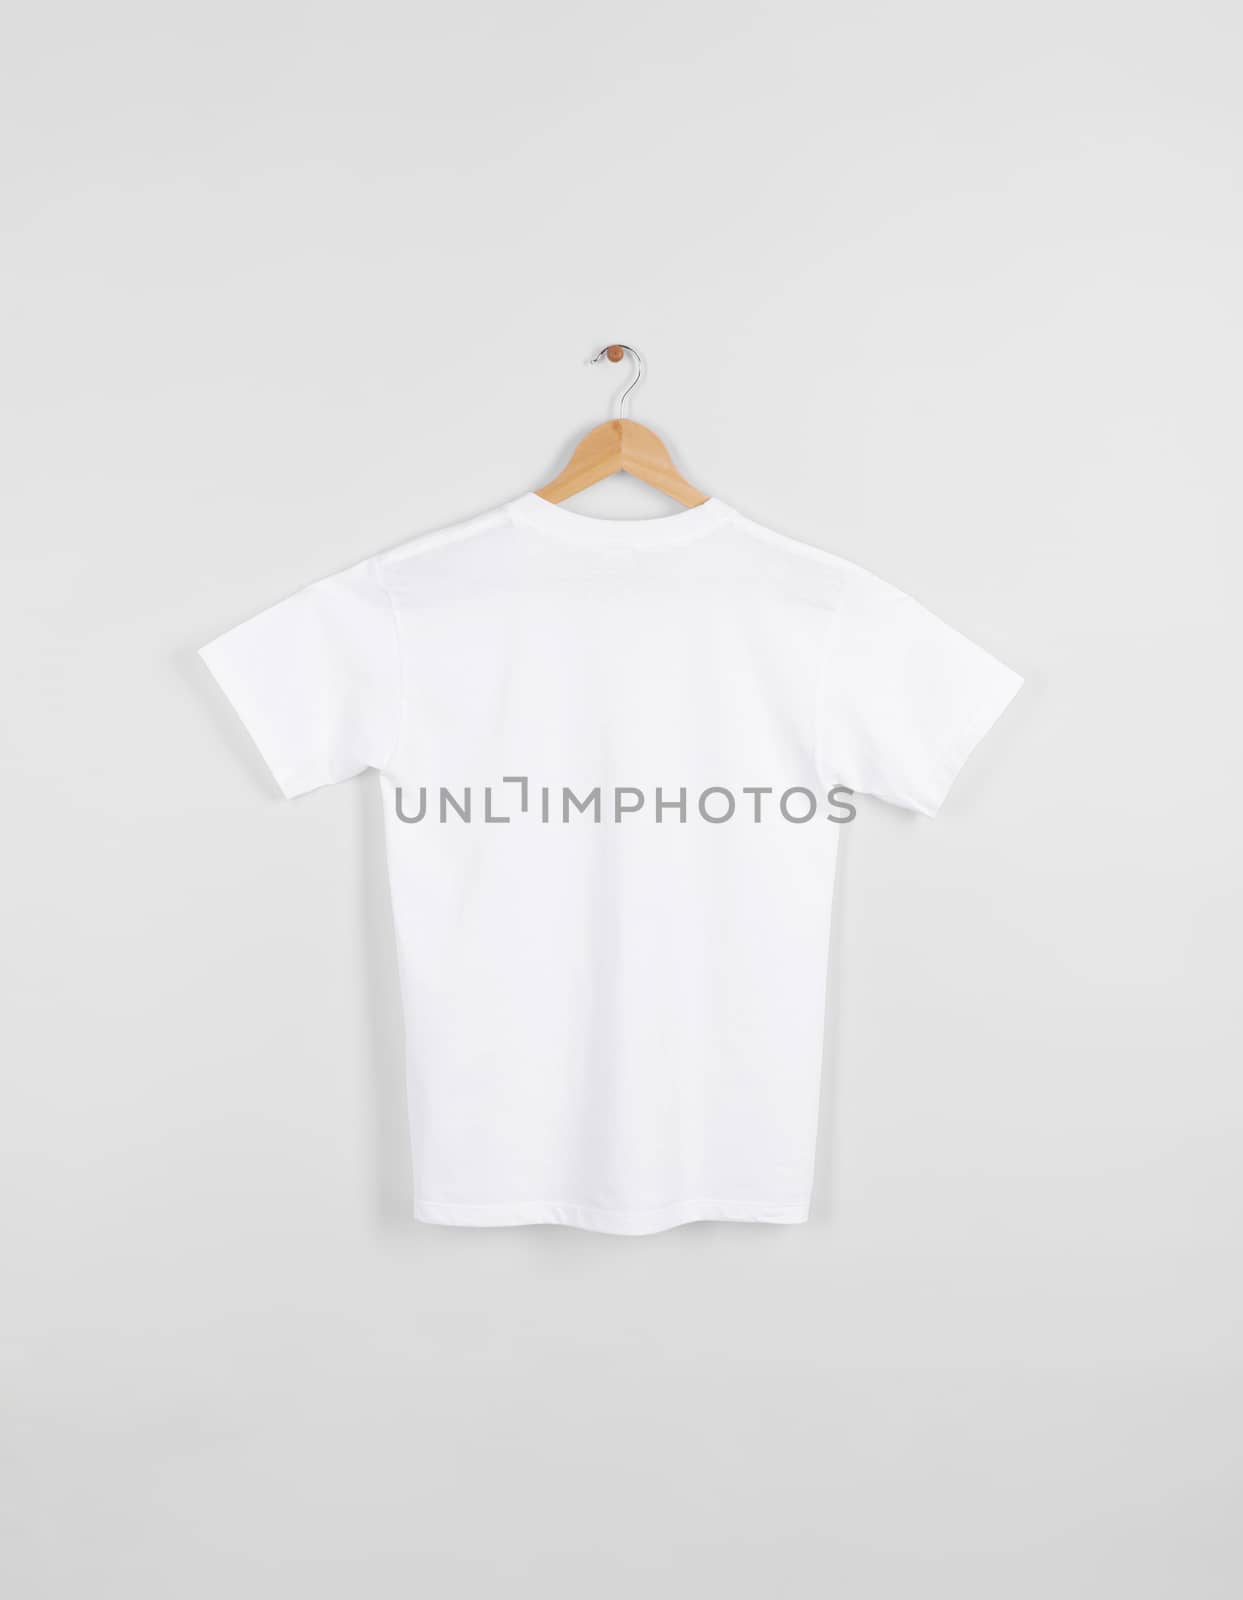 Mockup blank back white T-shirt hanging isolated on gray background.